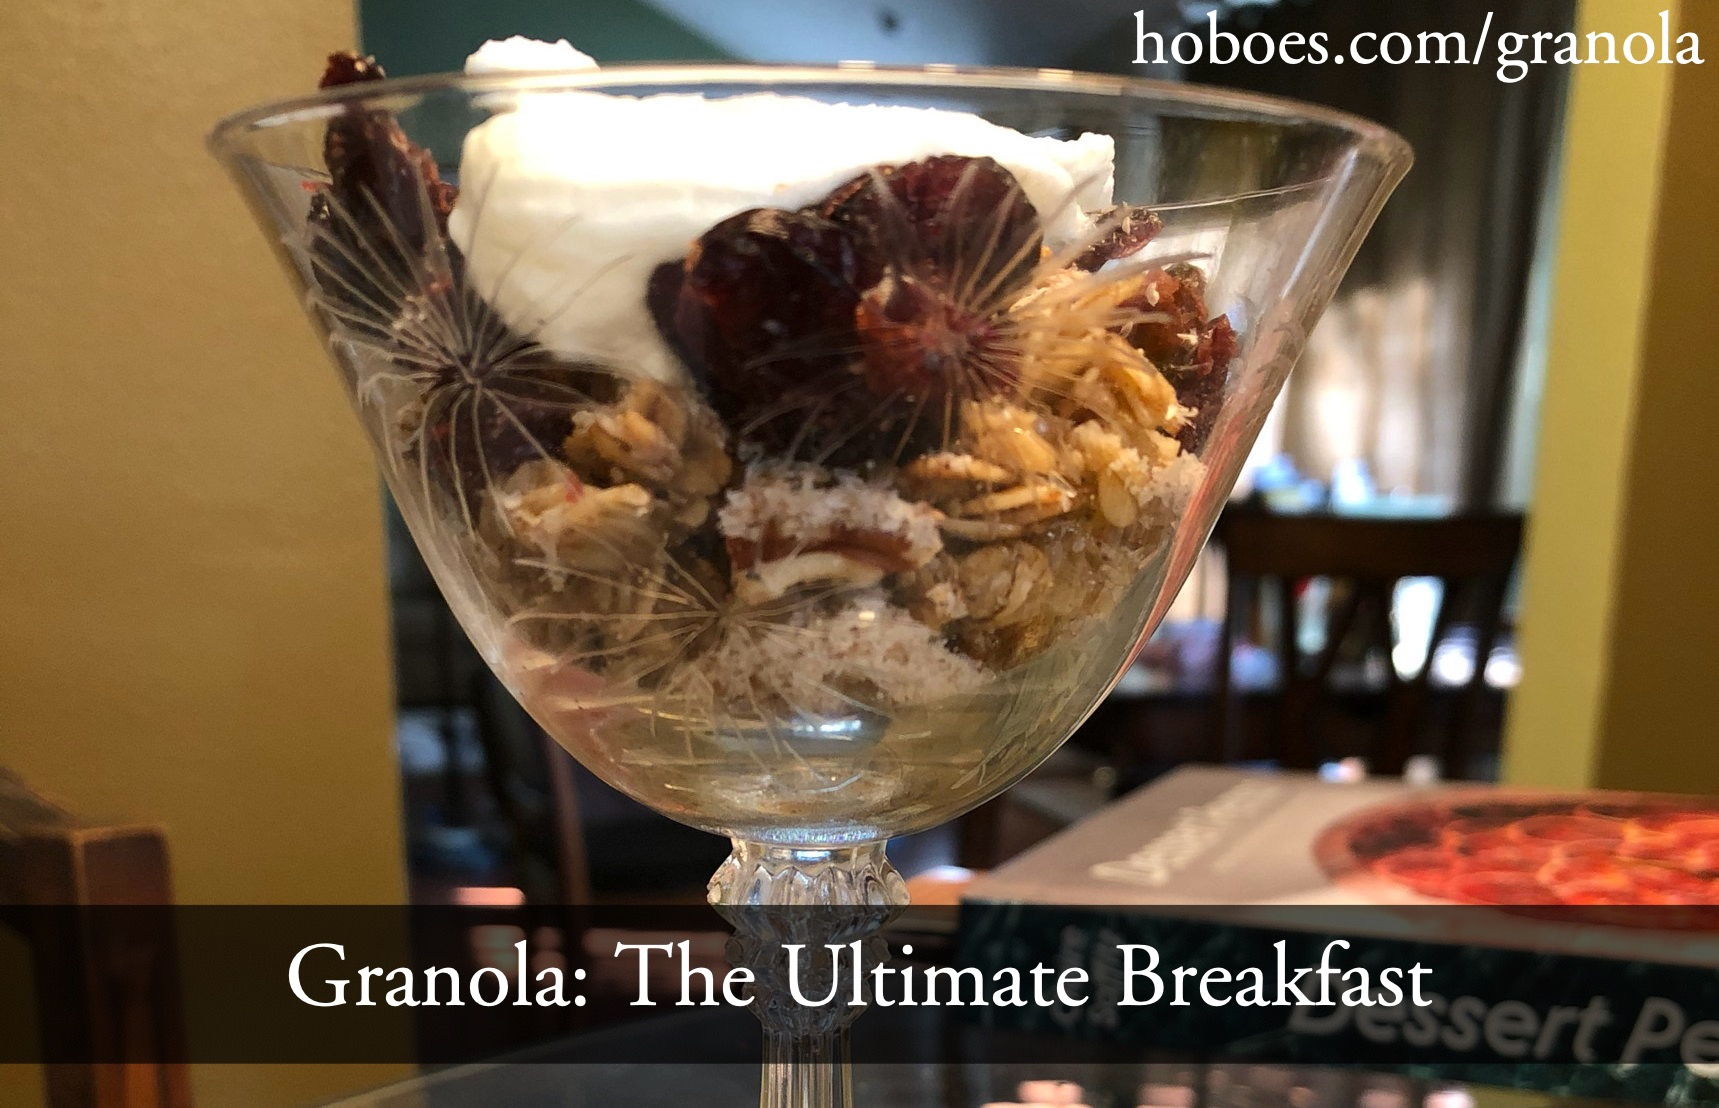 Granola: The Ultimate Breakfast: Granola in a sceptered wine glass.; breakfast; cereal; granola; Claire Saffitz